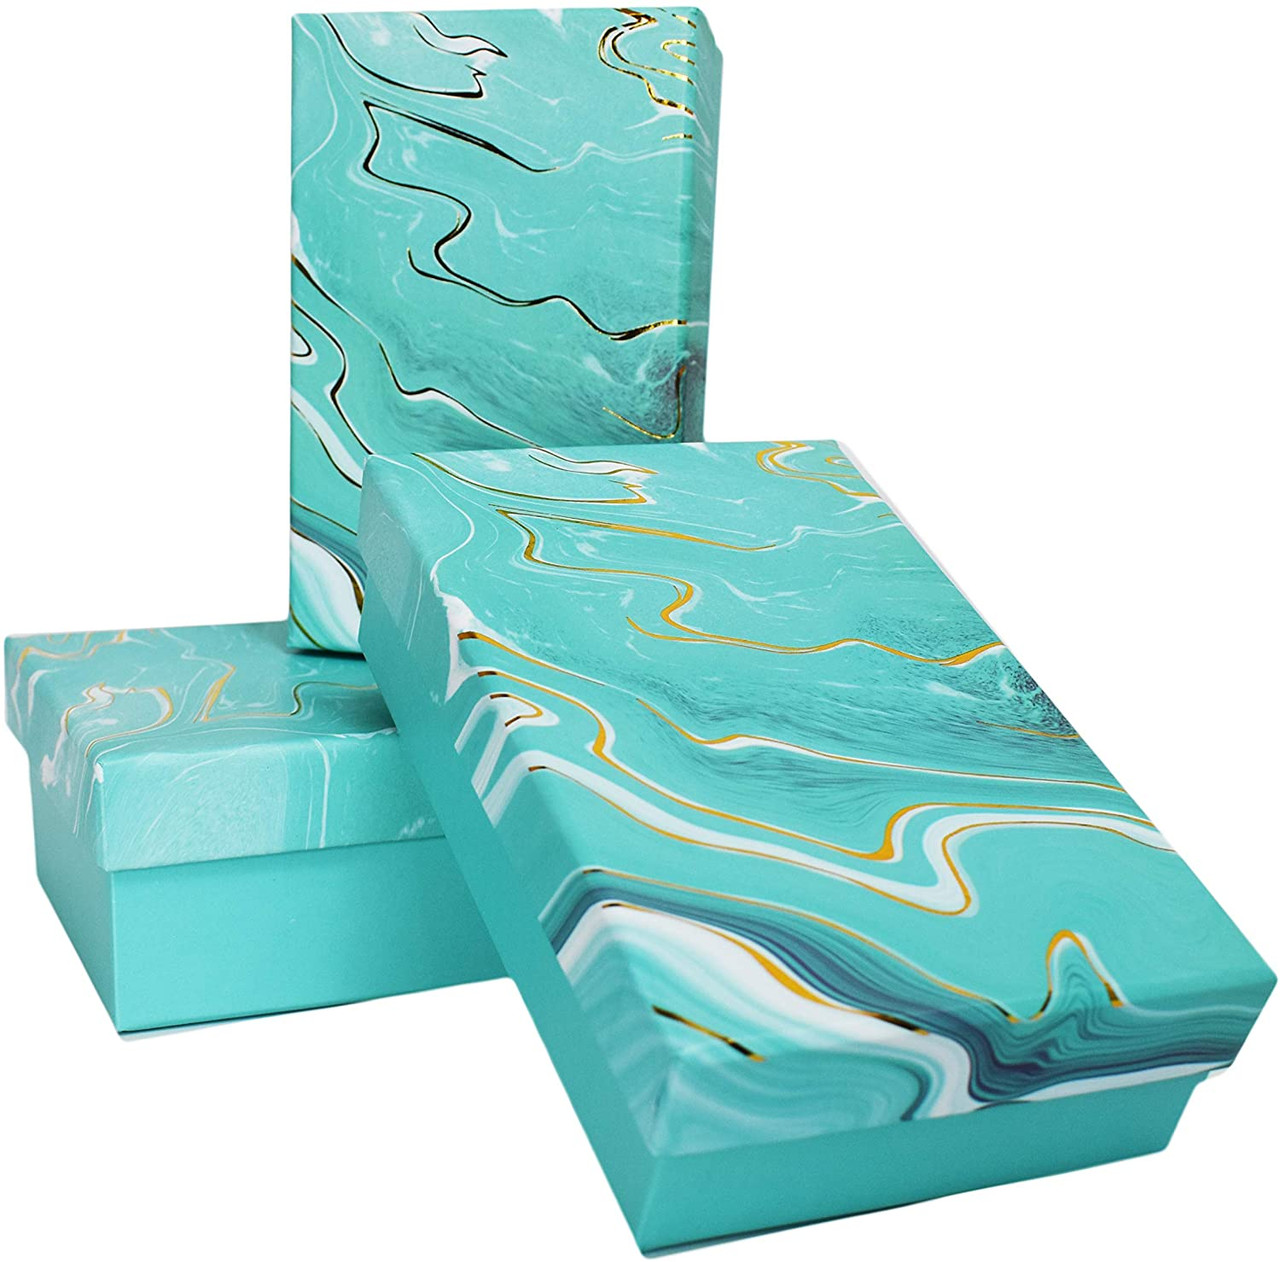 Teal ALEF Elegant Decorative Themed Nesting Gift Boxes -3 Boxes- Nesting  Boxes Beautifully Themed and Decorated! - DIY Tool Supply